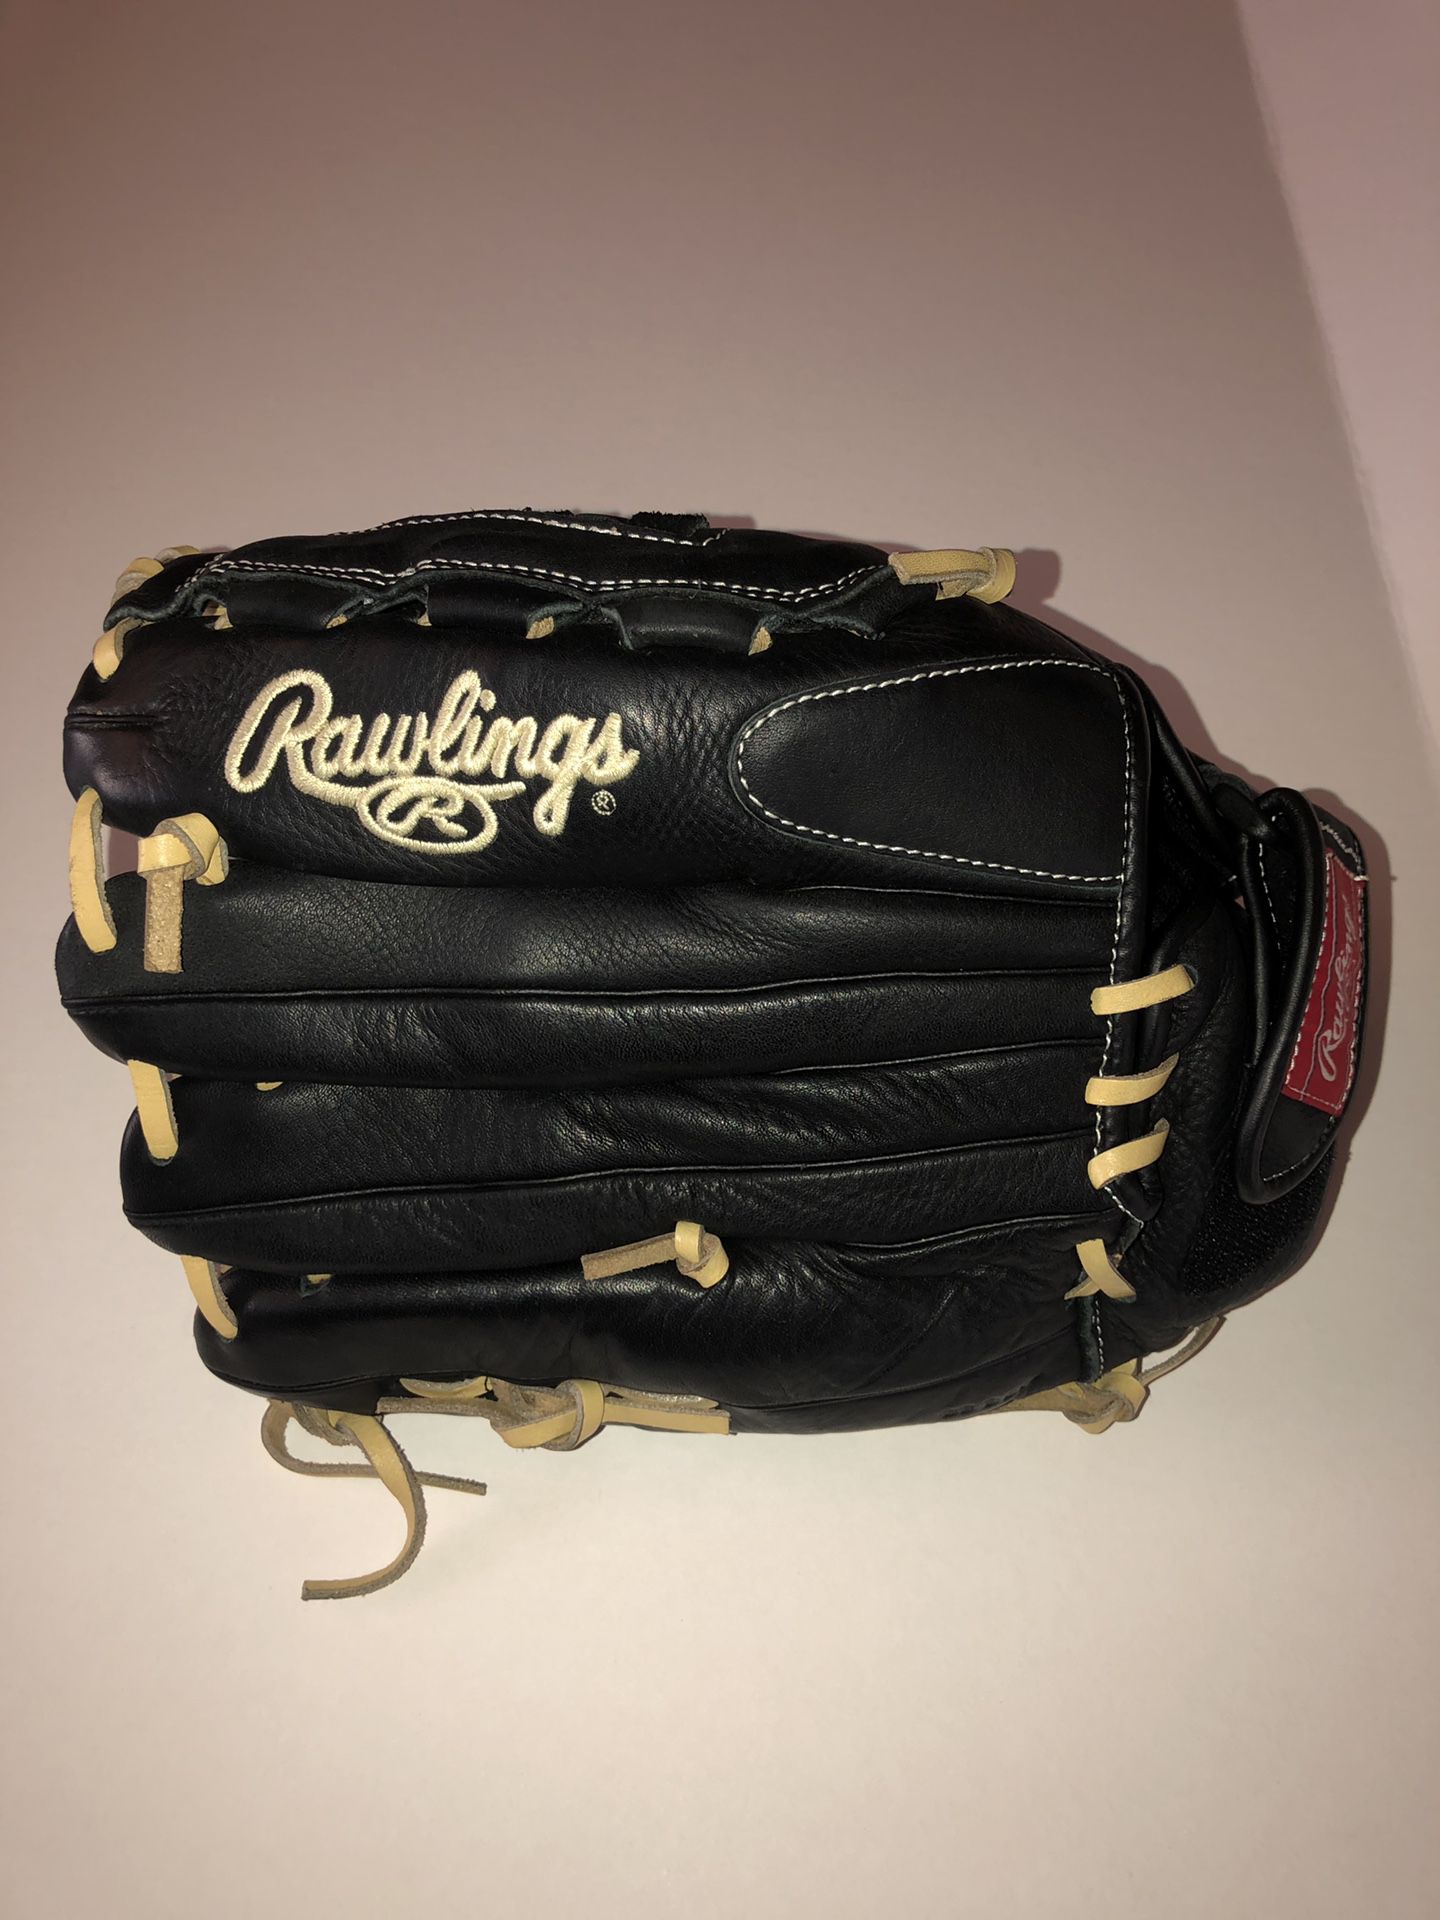 Rawlings 12 1/2 baseball softball leather glove